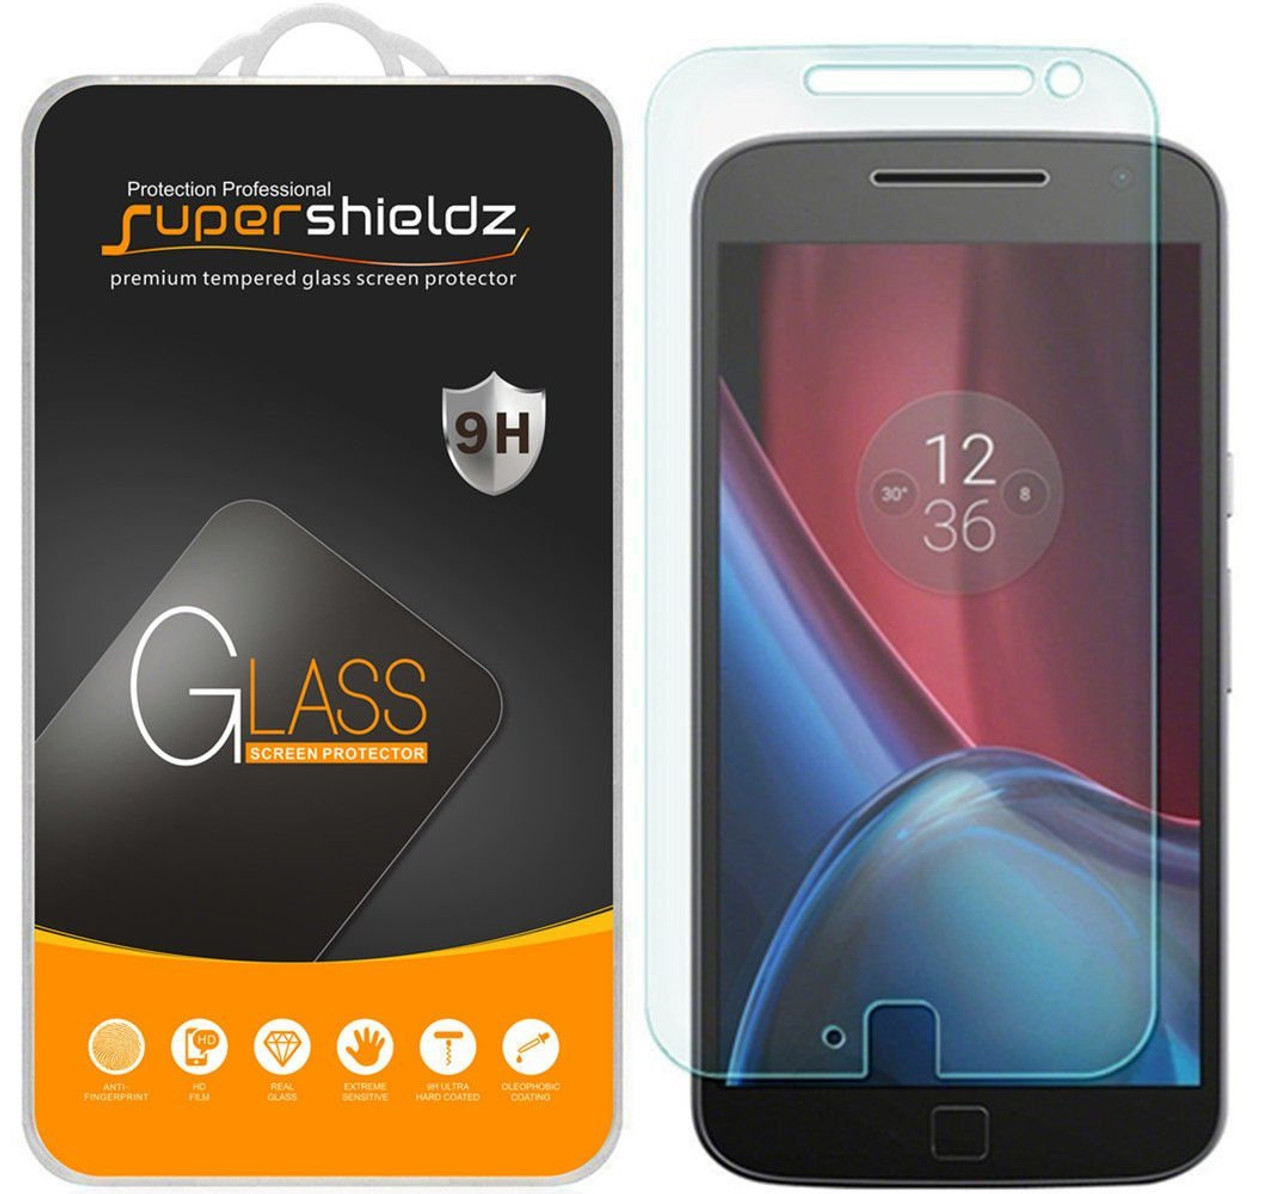 2-Pack] Supershieldz for Moto G4 Plus / Moto G Plus (4th Generation) Tempered Glass Screen Protector, Anti-Scratch, Bubble Free - Supershieldz